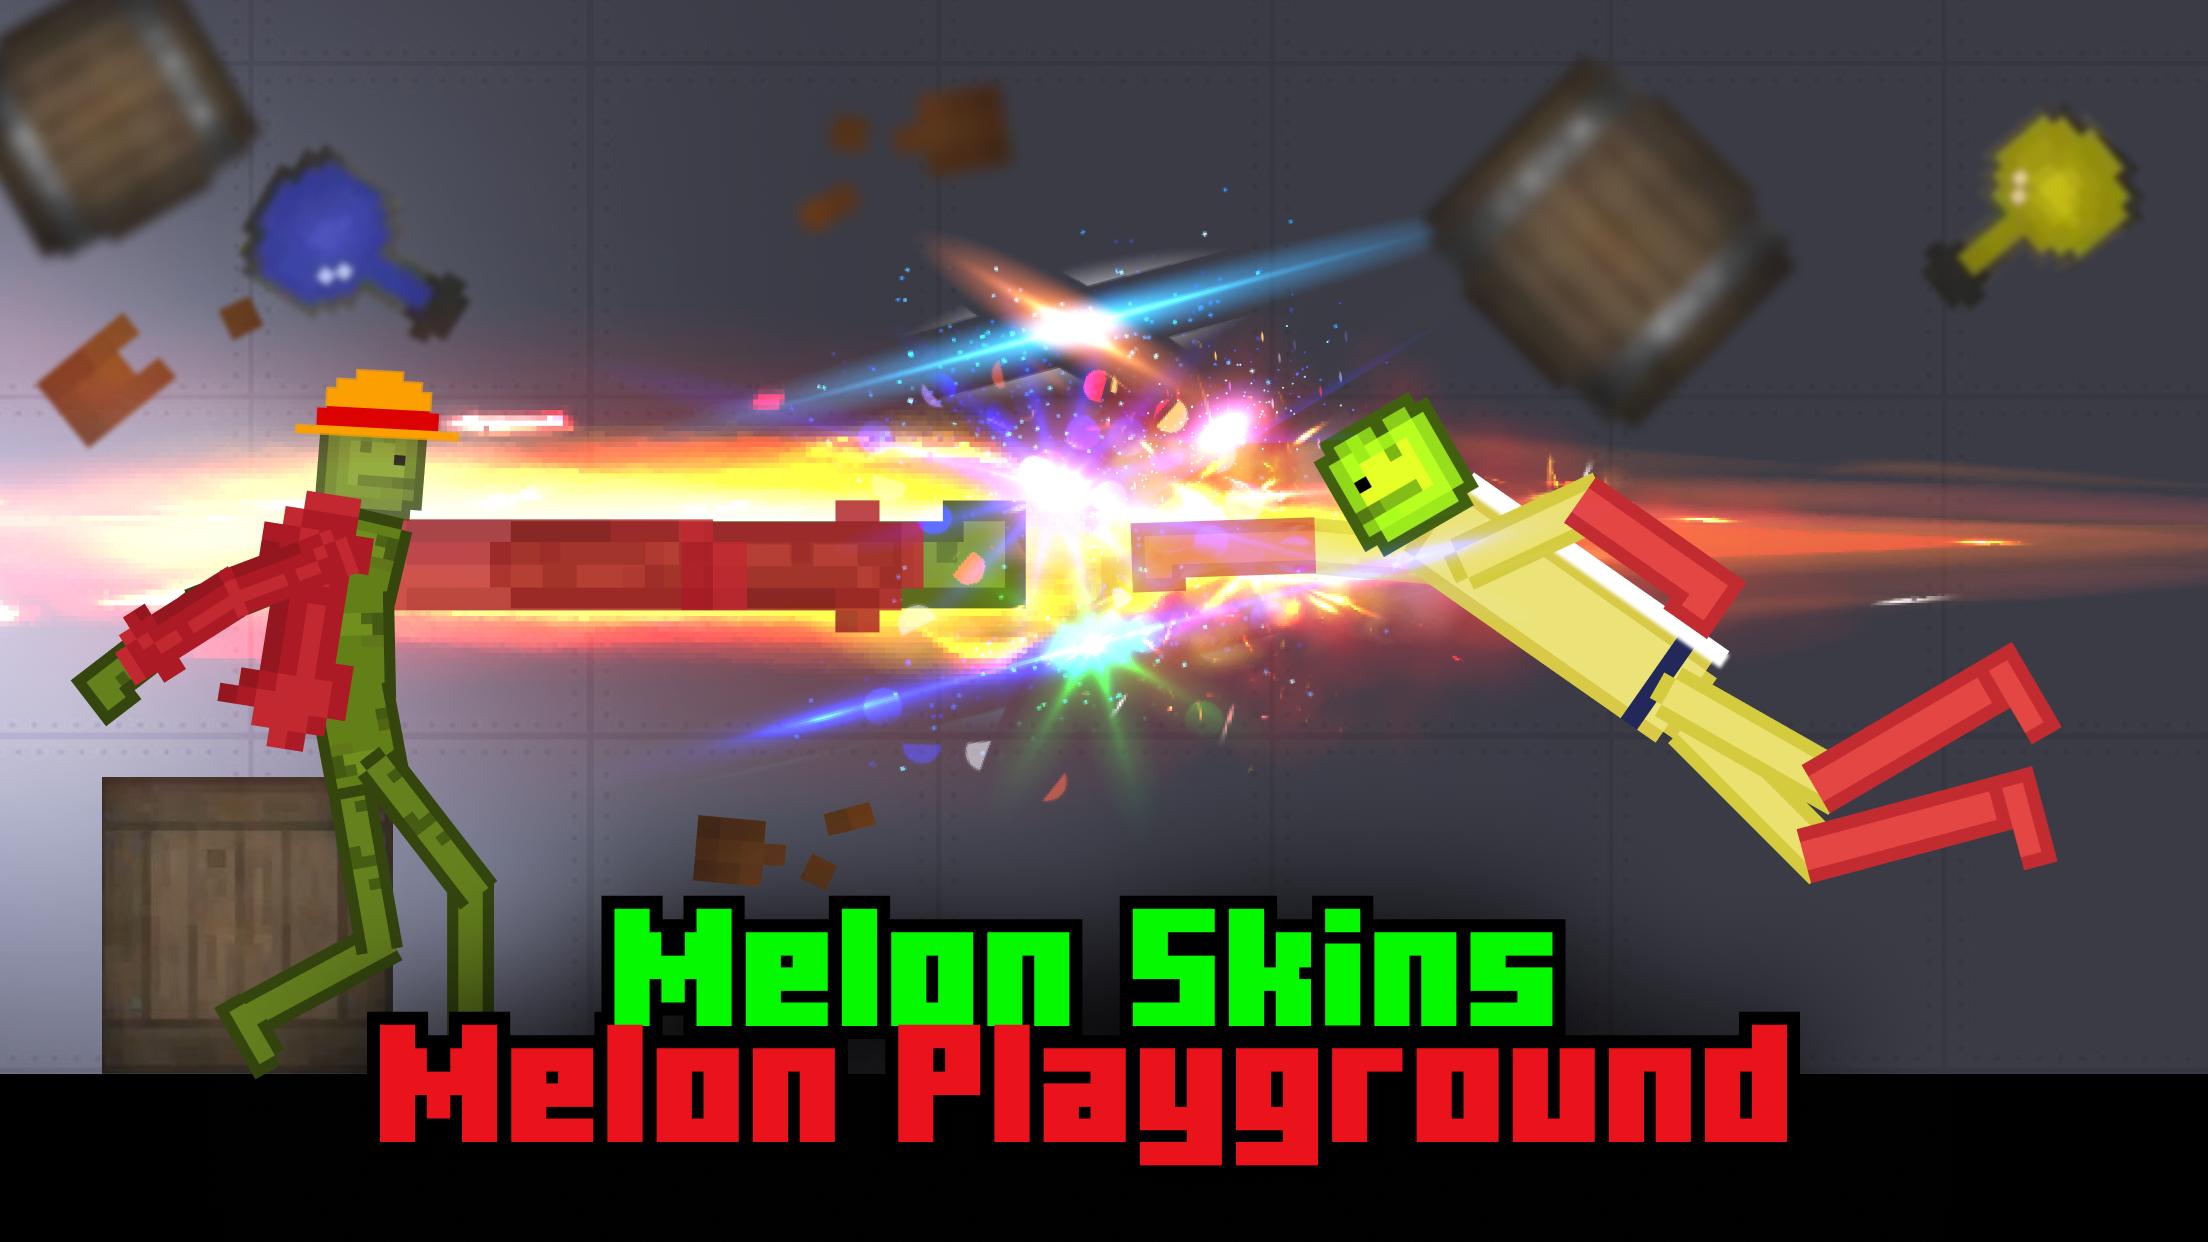 Download Melon Skin Playground - Roblox App Free on PC (Emulator